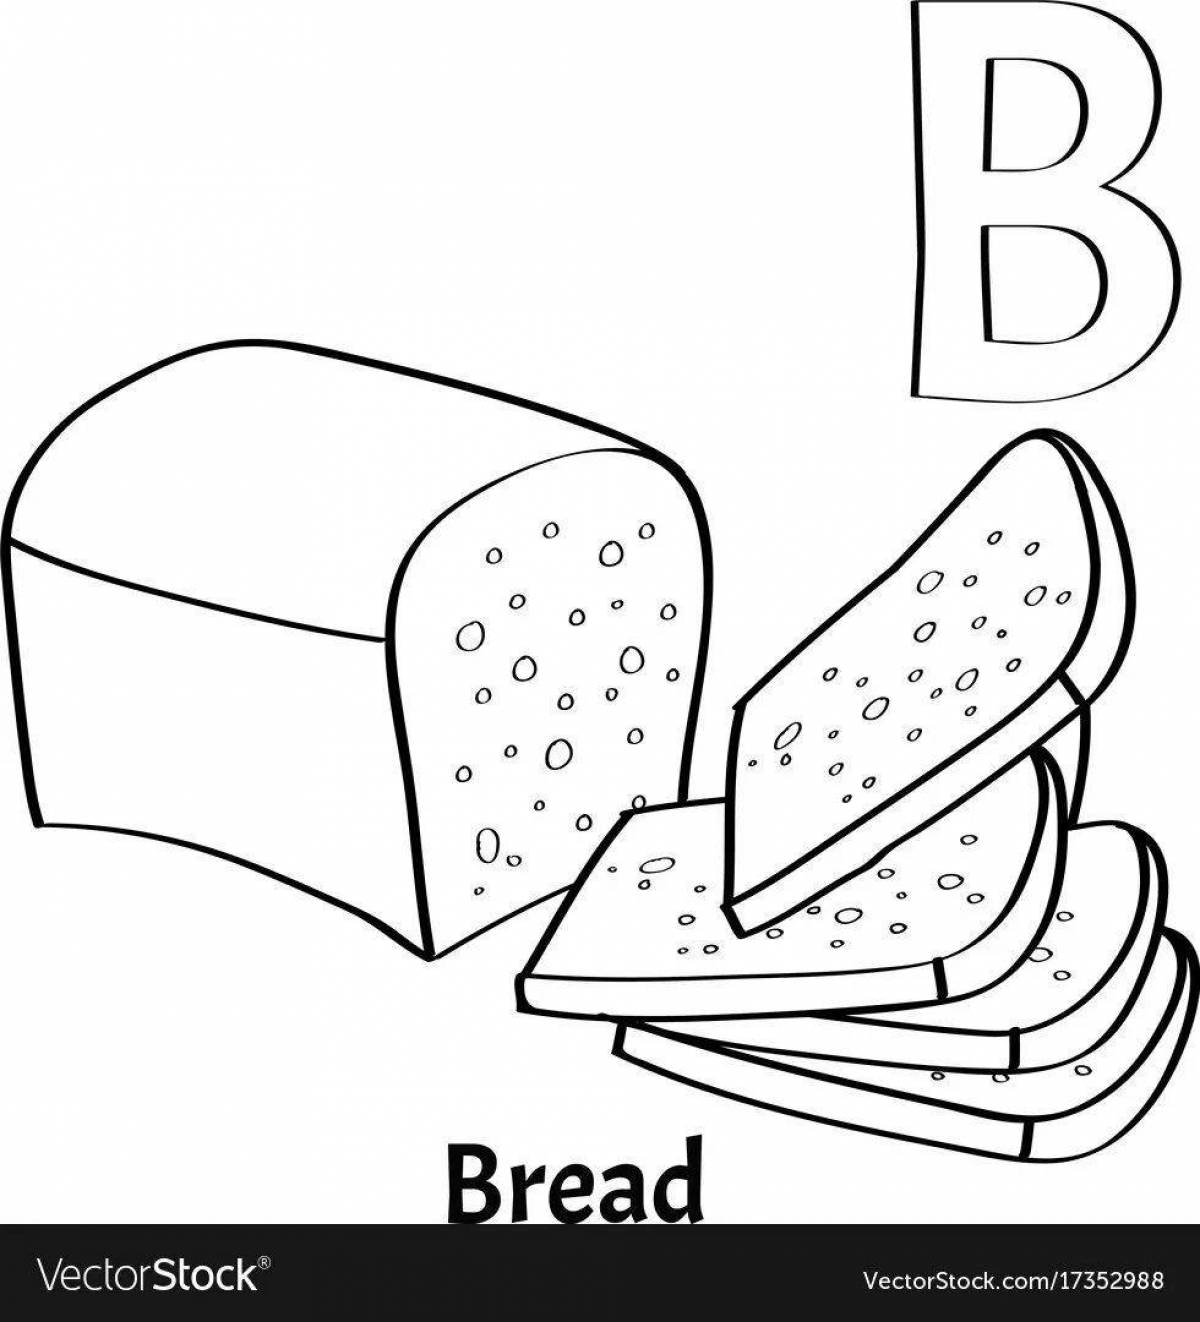 Artisan coloring a piece of bread